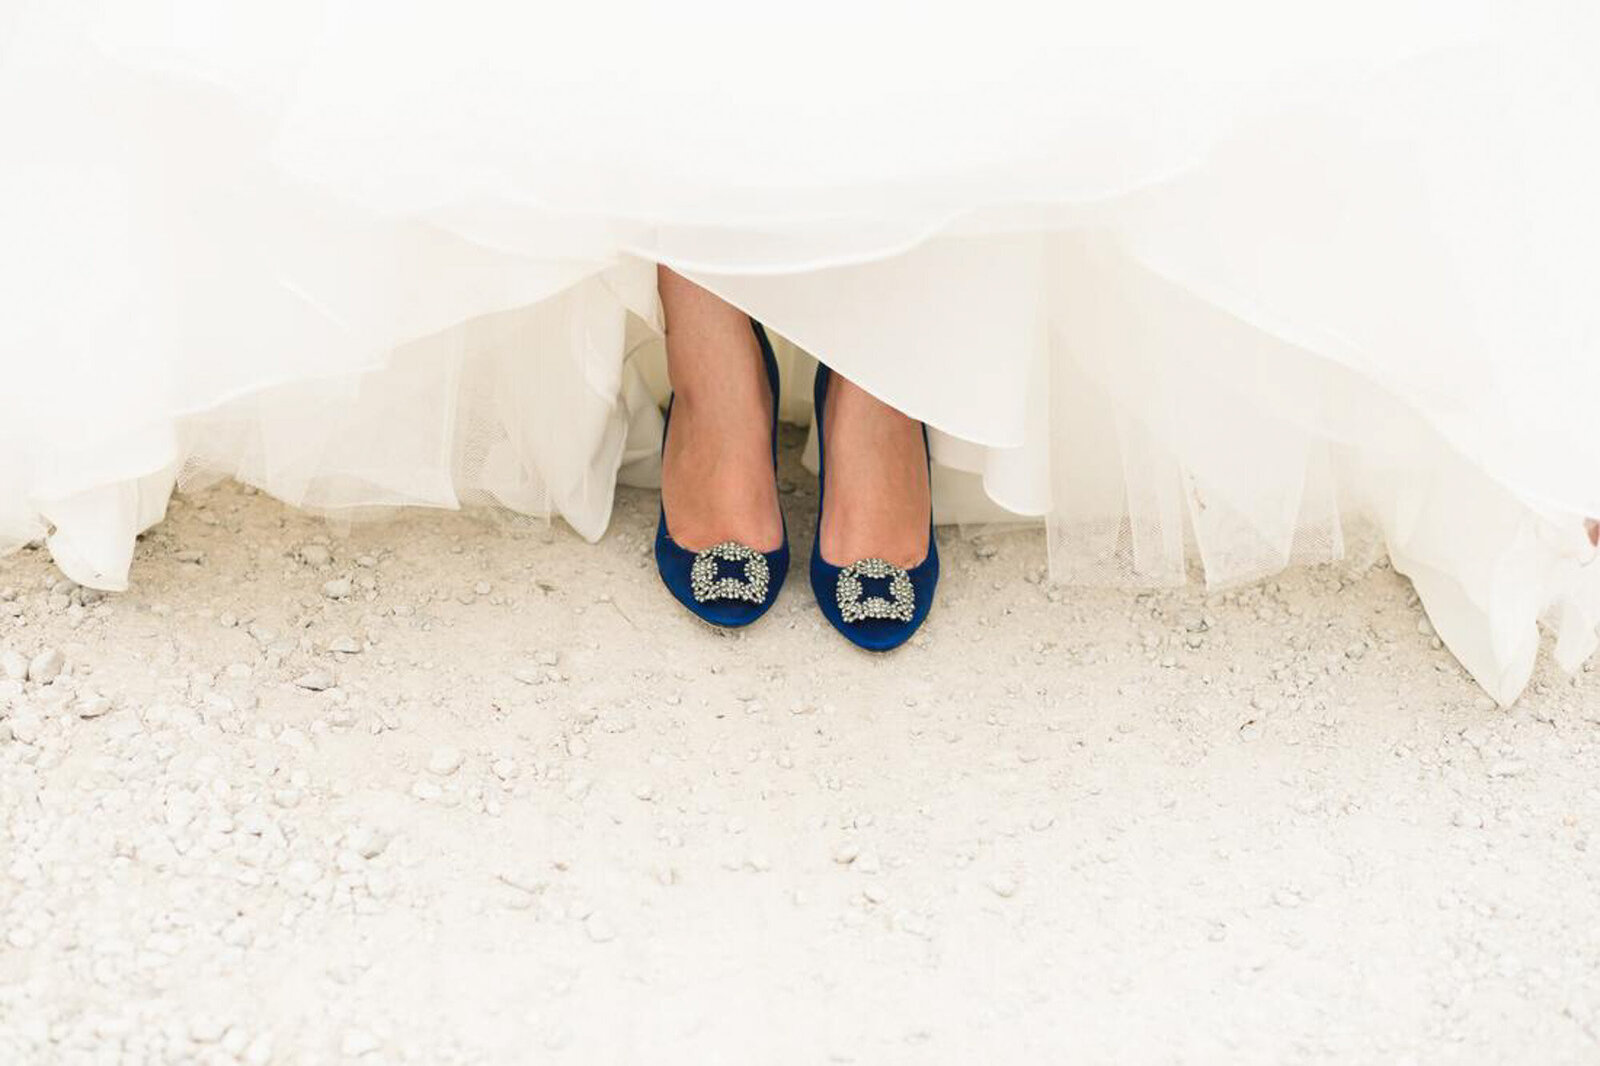 Bride's feet wearing sandals